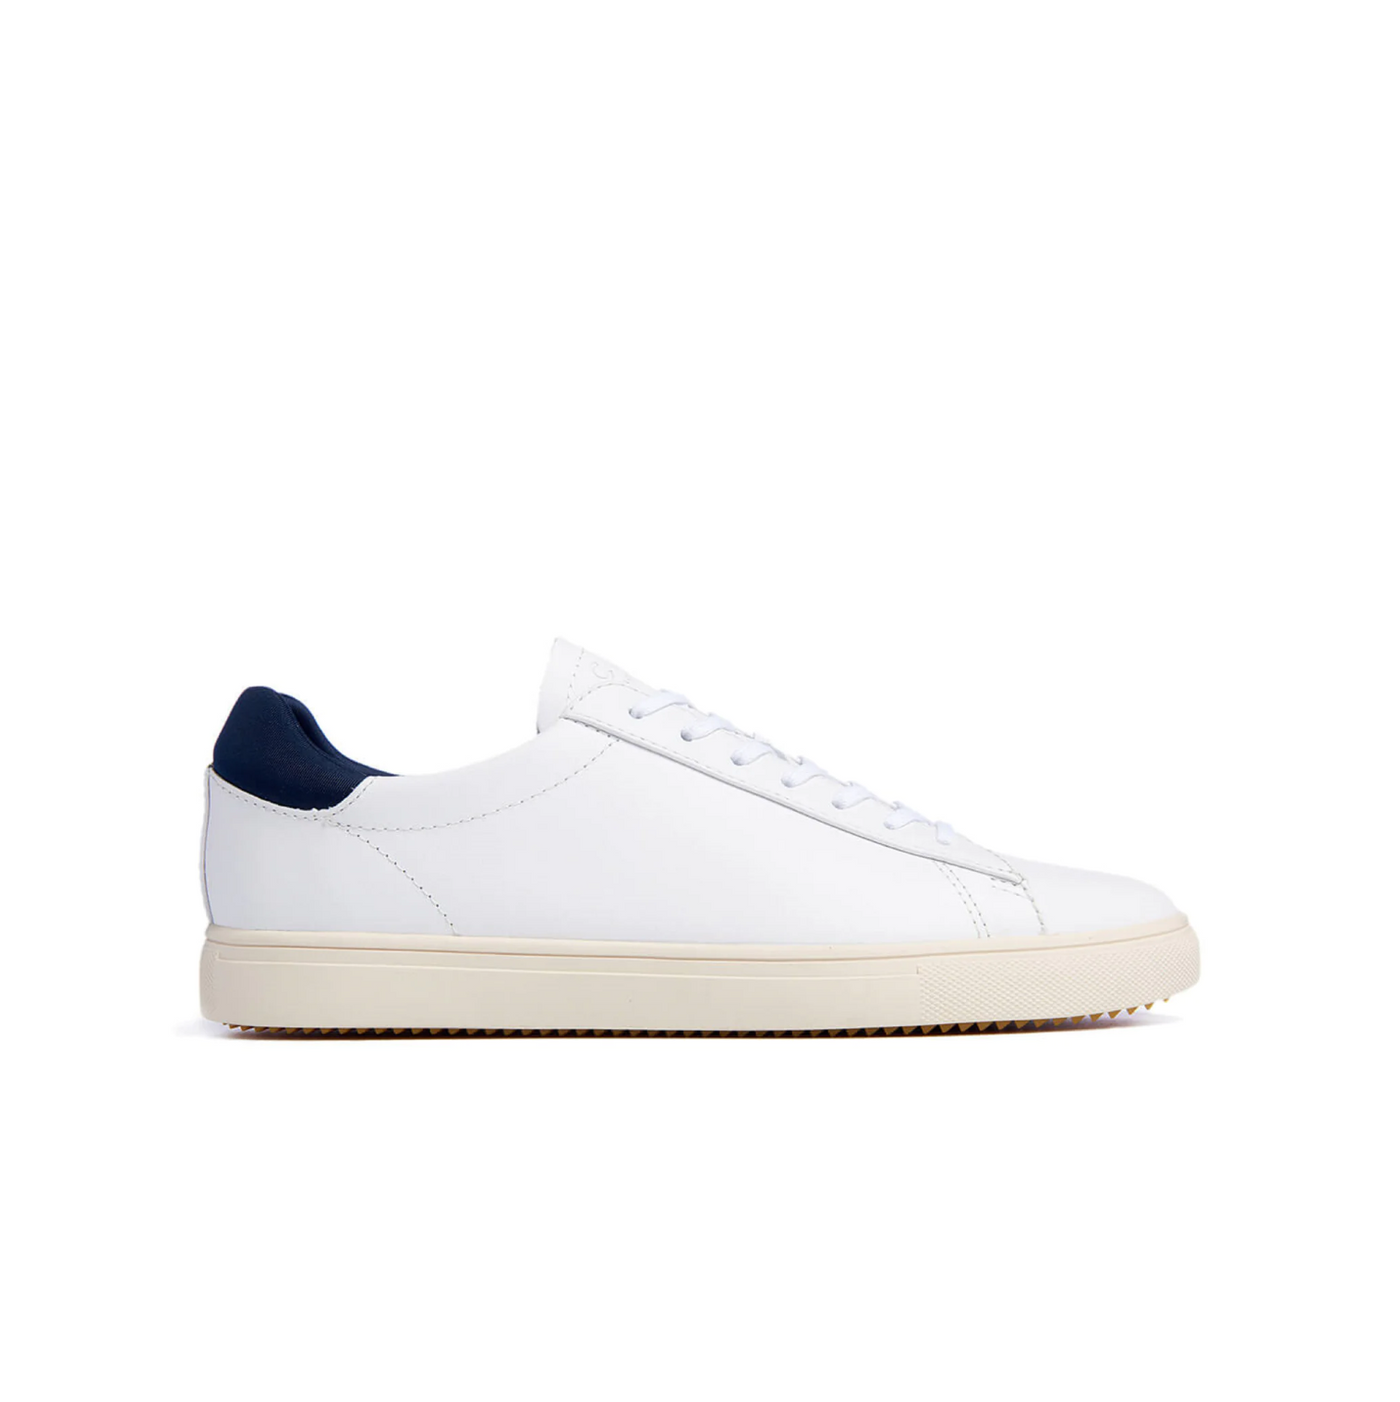 Clae - Bradley Sneaker - White Leather Navy